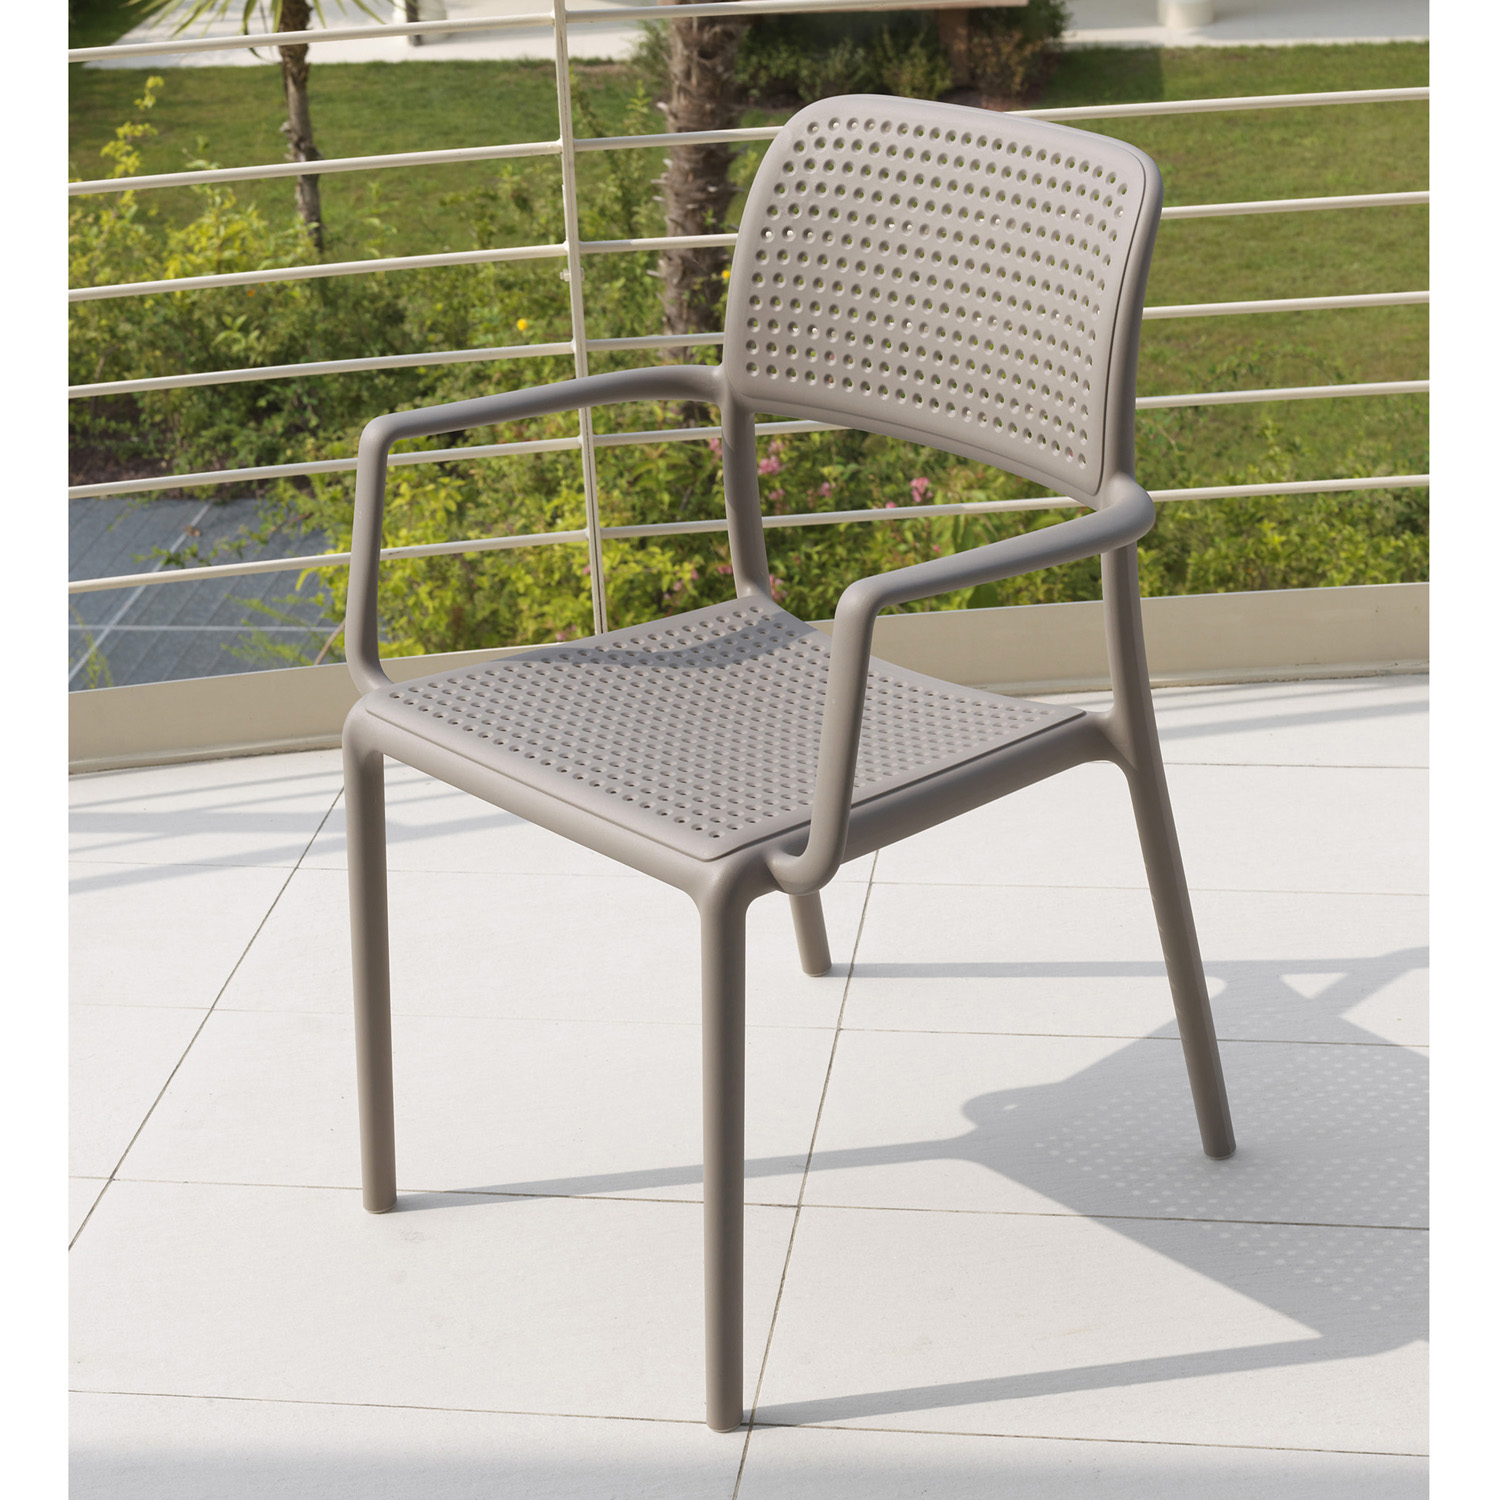 Nardi Bora Chair Turtle Dove Grey (Pack of 2) Chairs Nardi   